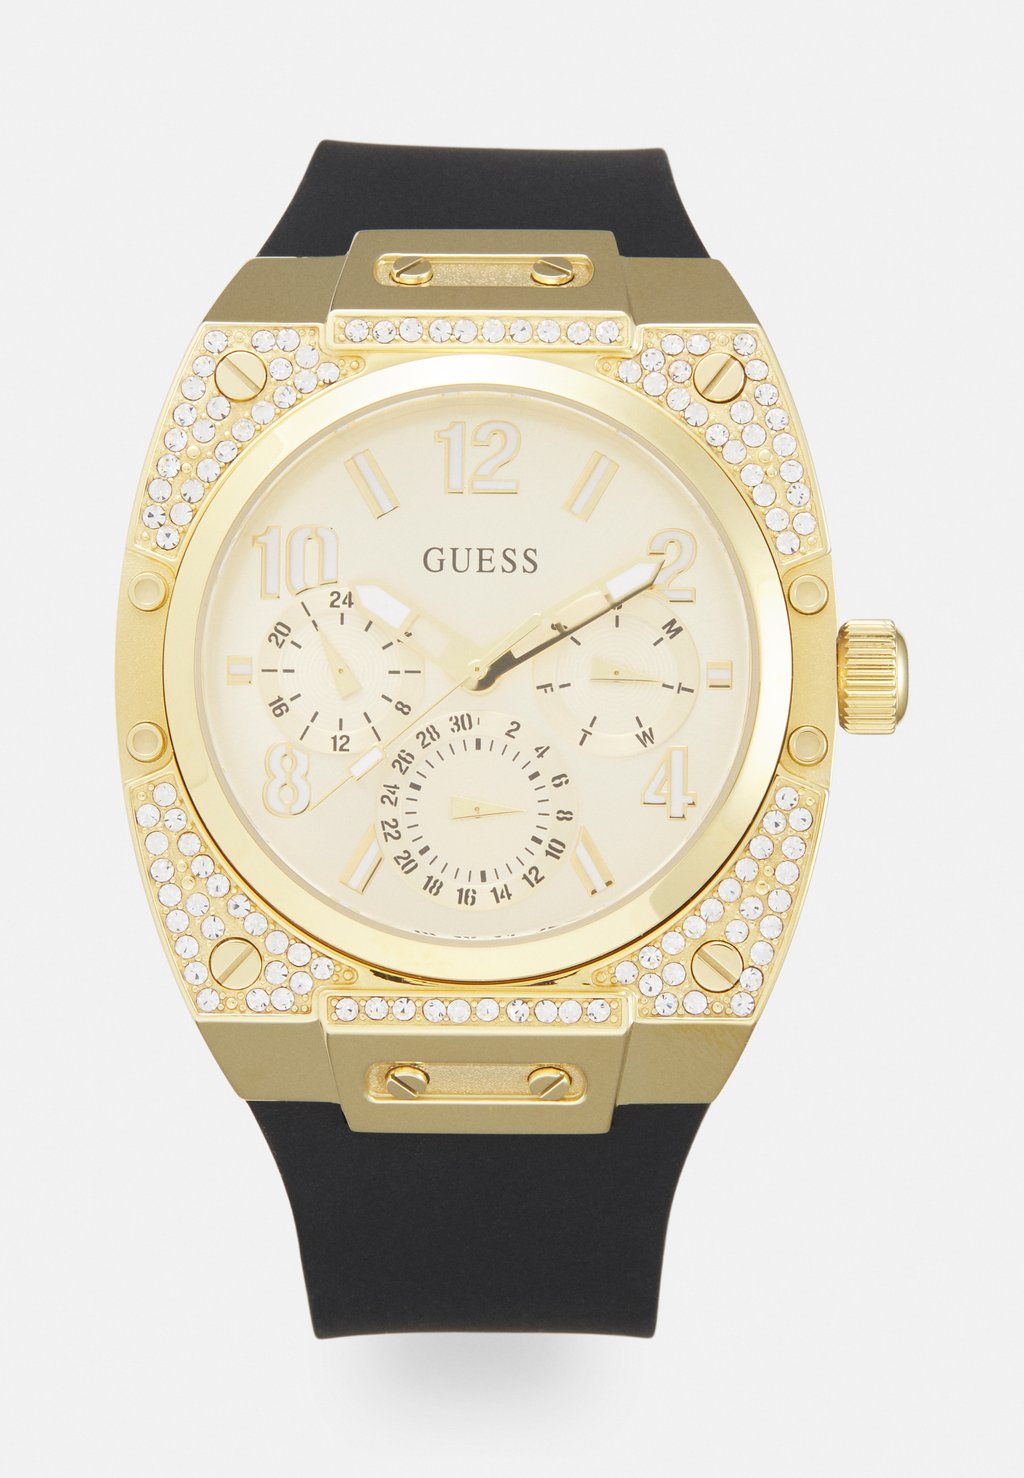 Часы Prodigy Exclusive Guess, цвет gold-coloured/black часы prodigy exclusive guess цвет silver coloured black